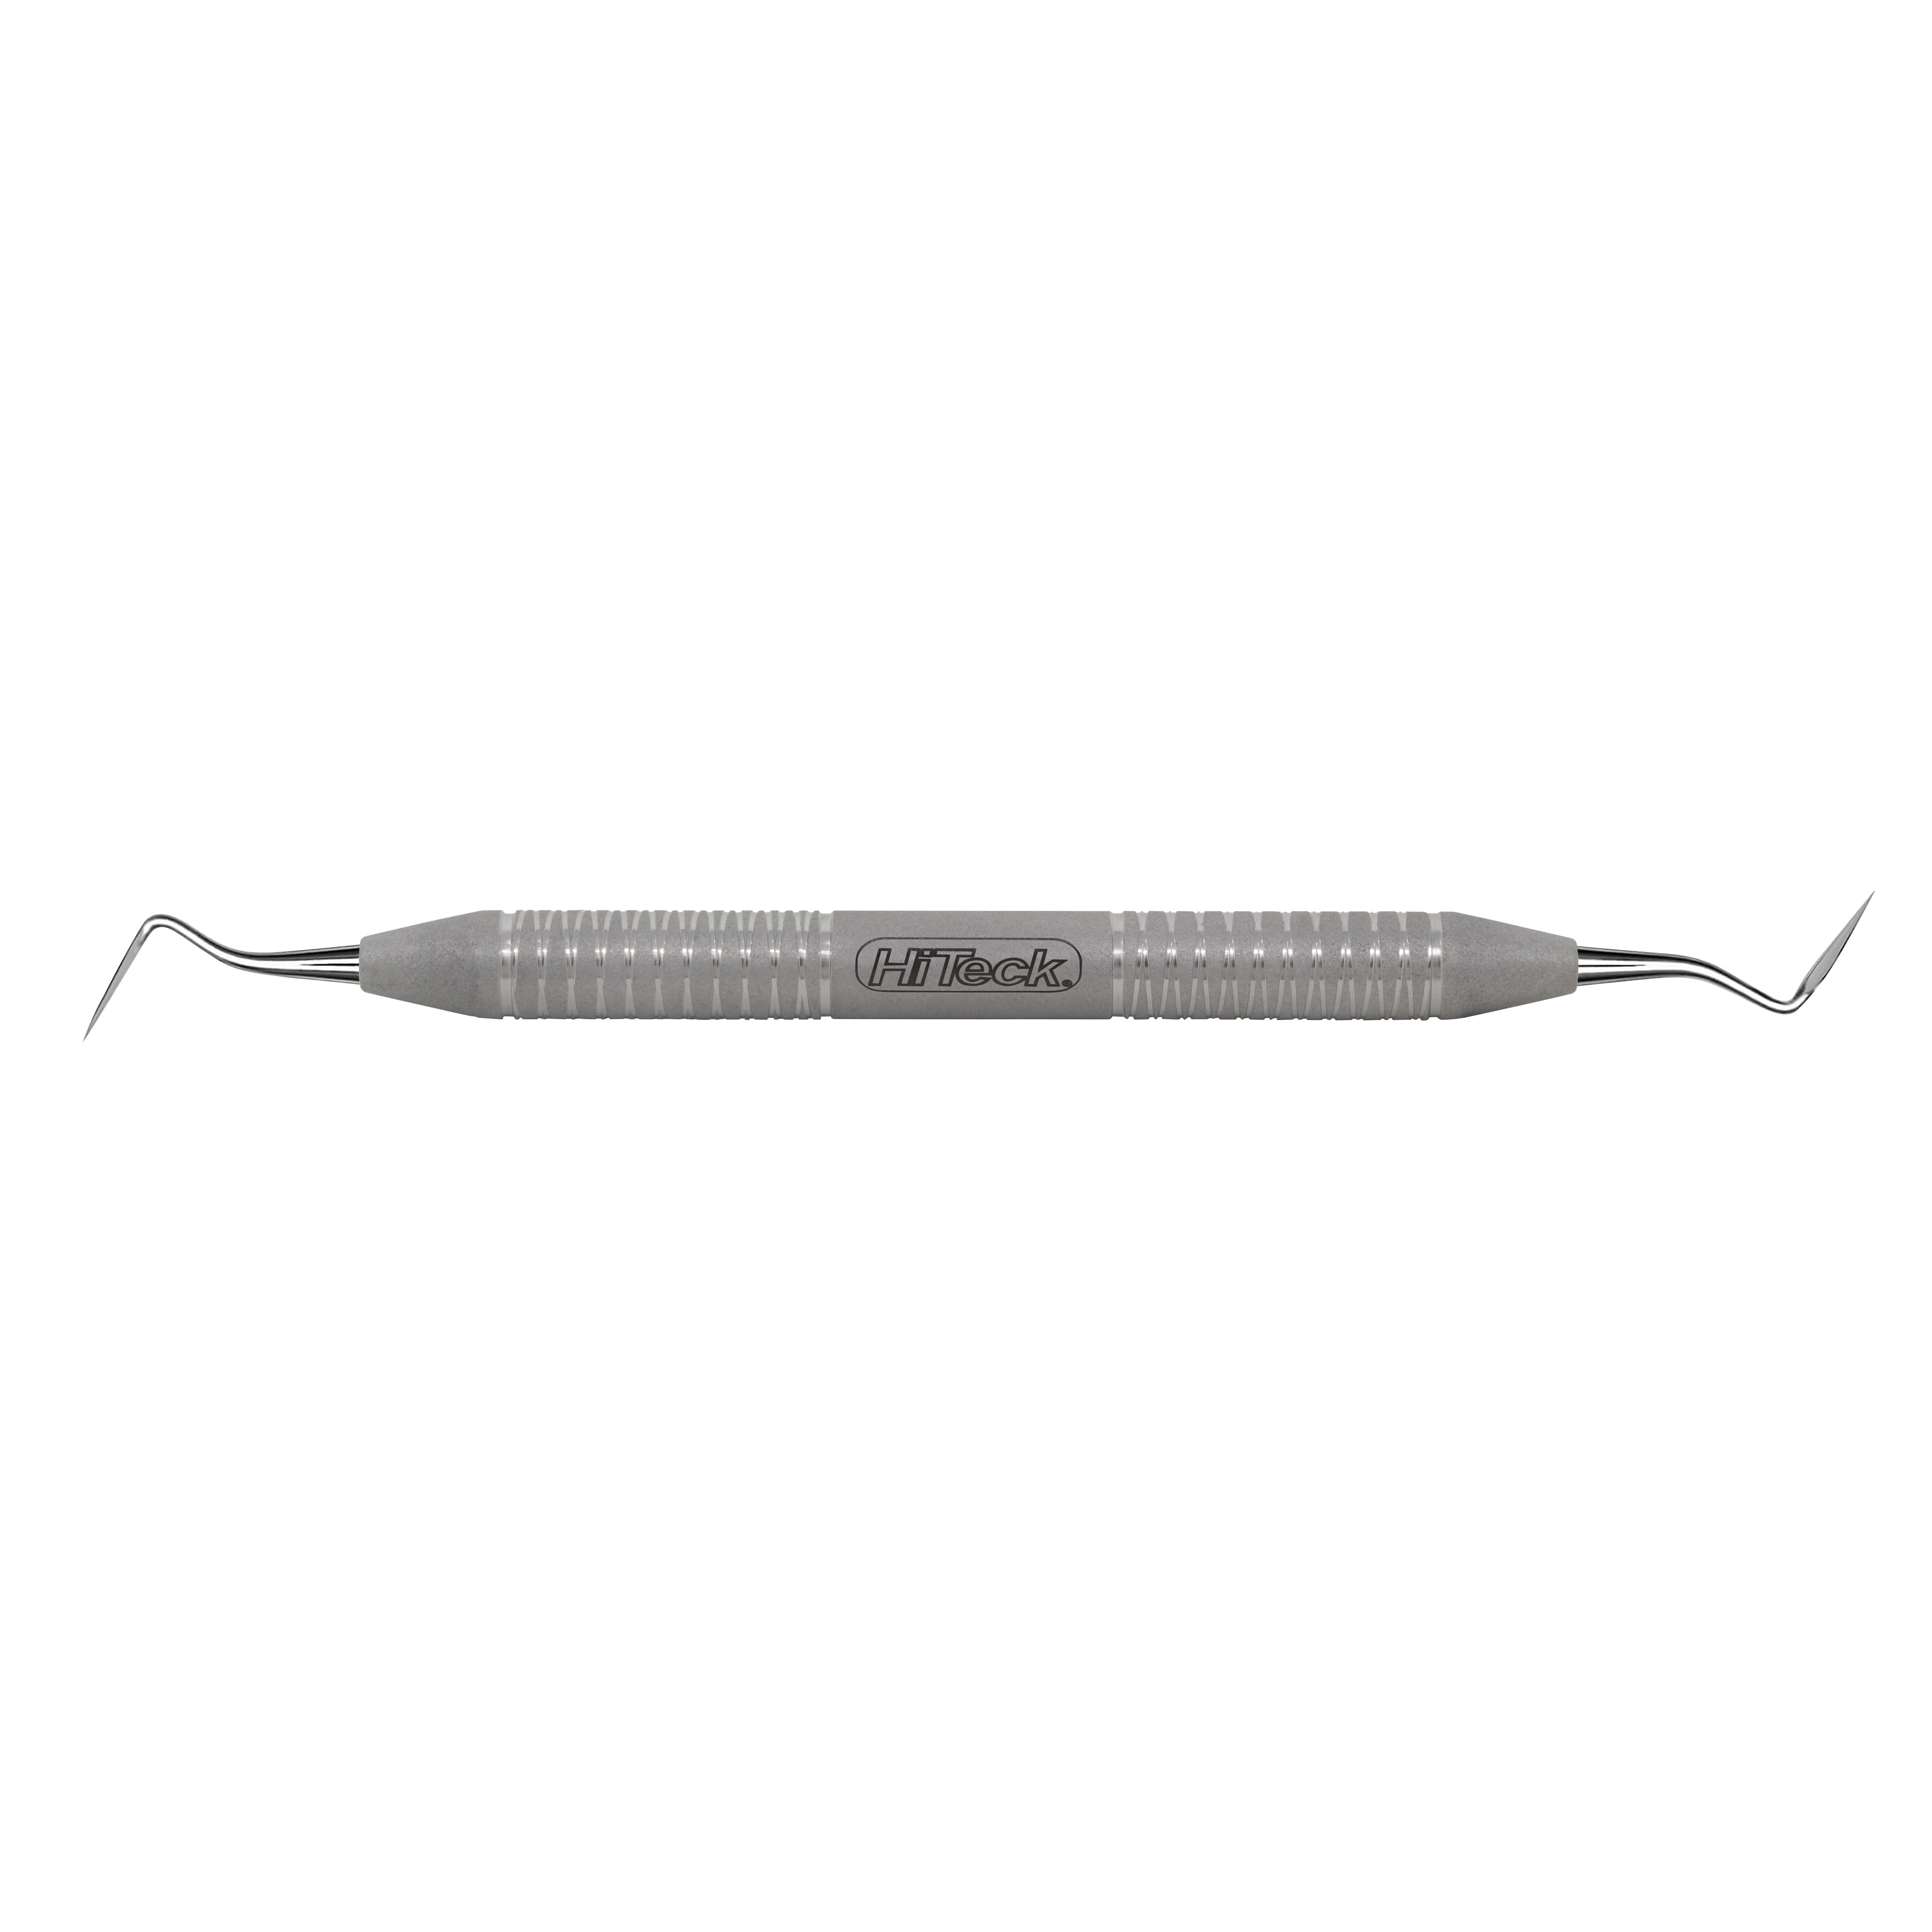 1/2 Sanders Periodontal Knife - HiTeck Medical Instruments